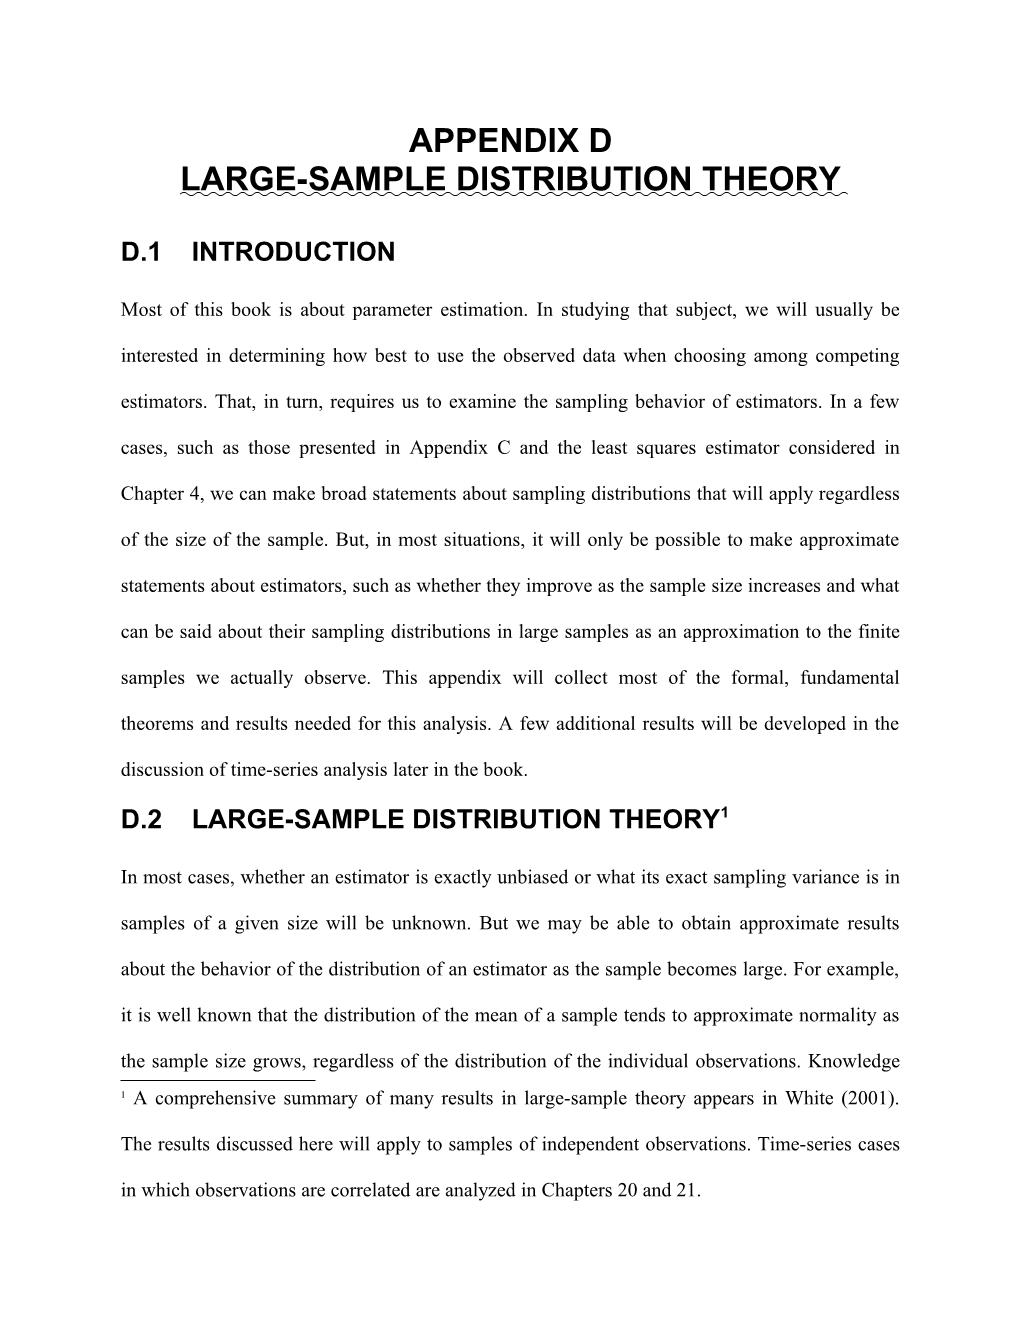 Large-Sample Distribution Theory